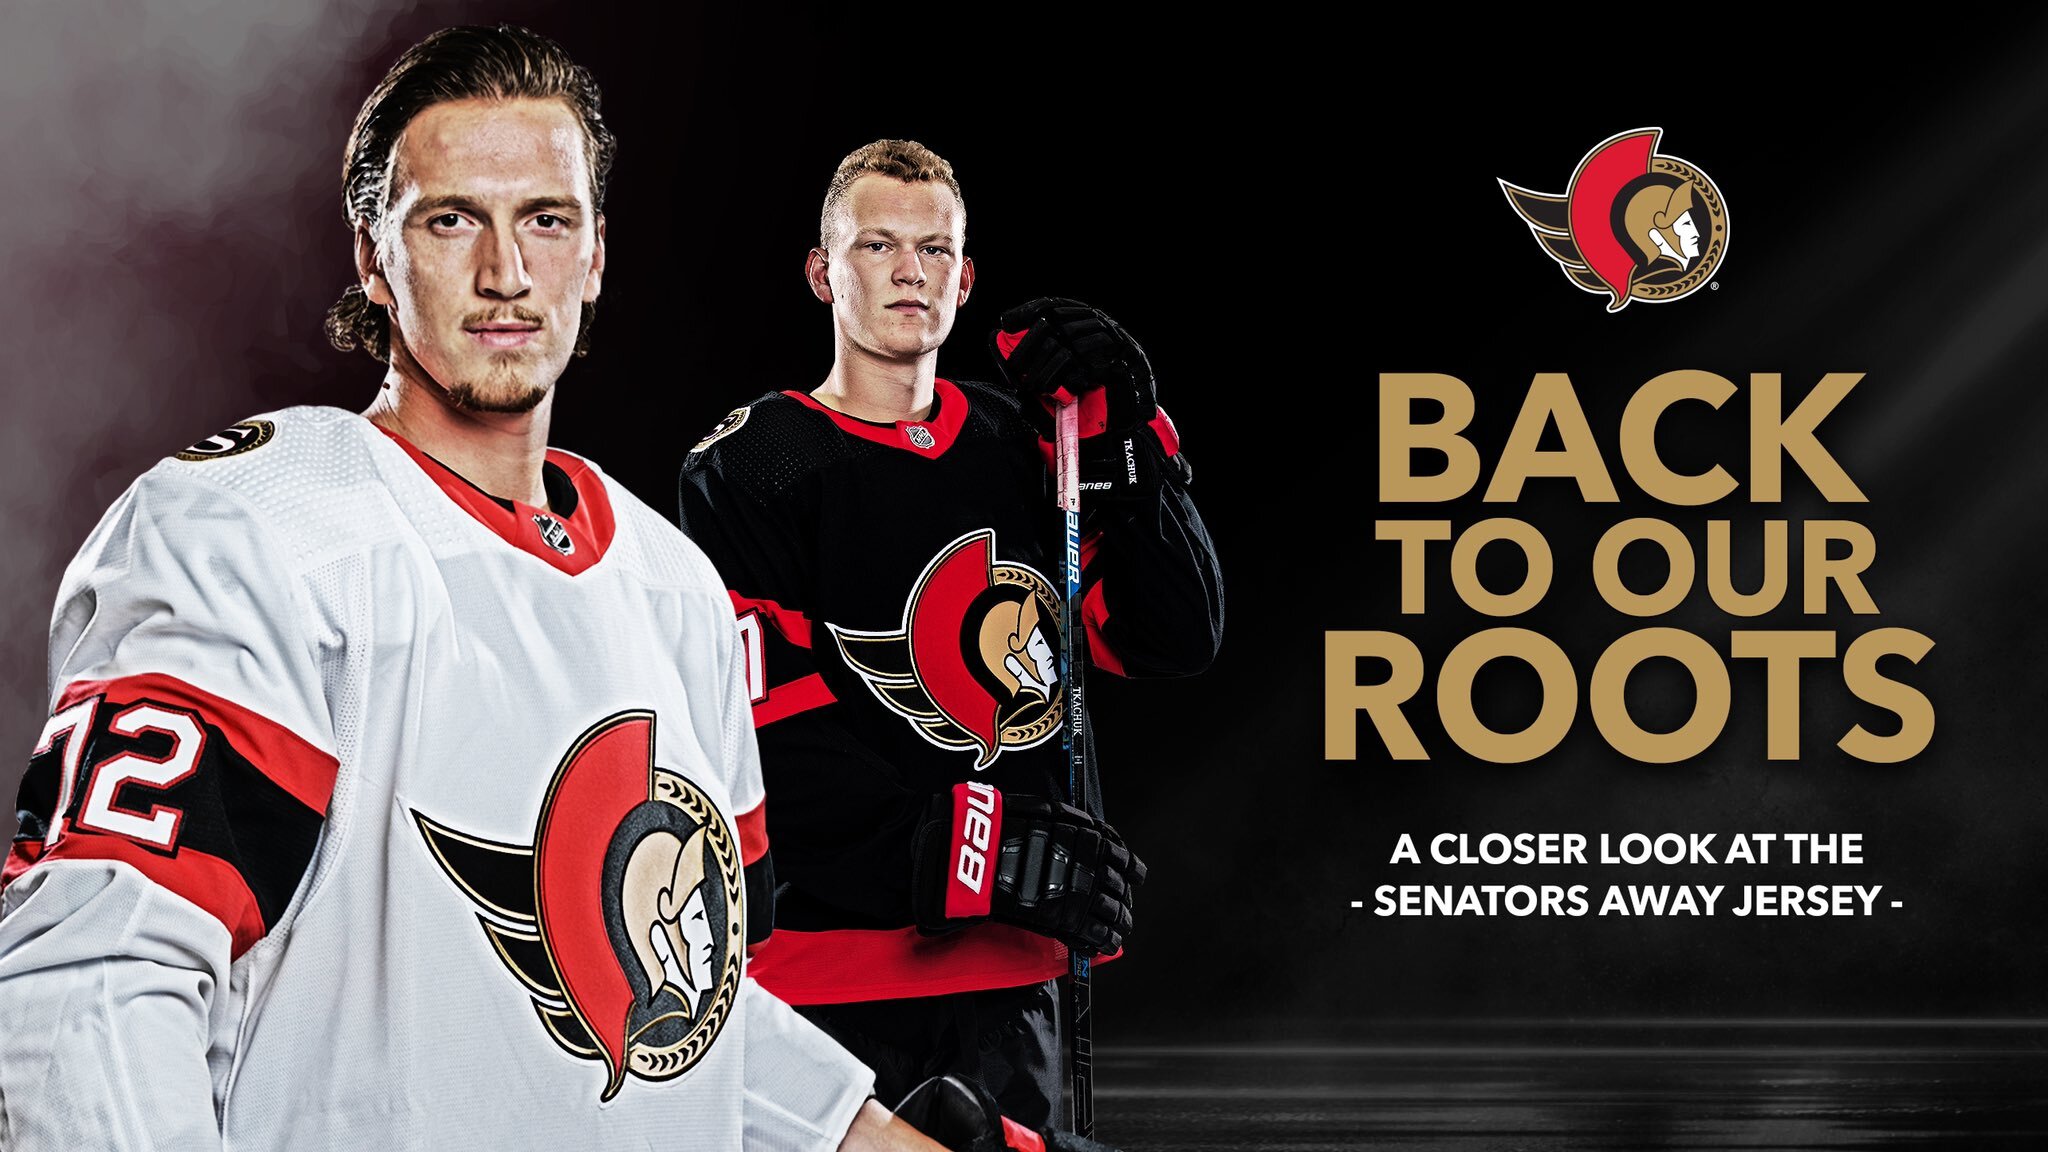 Ottawa Senators - The heritage jerseys are coming out again